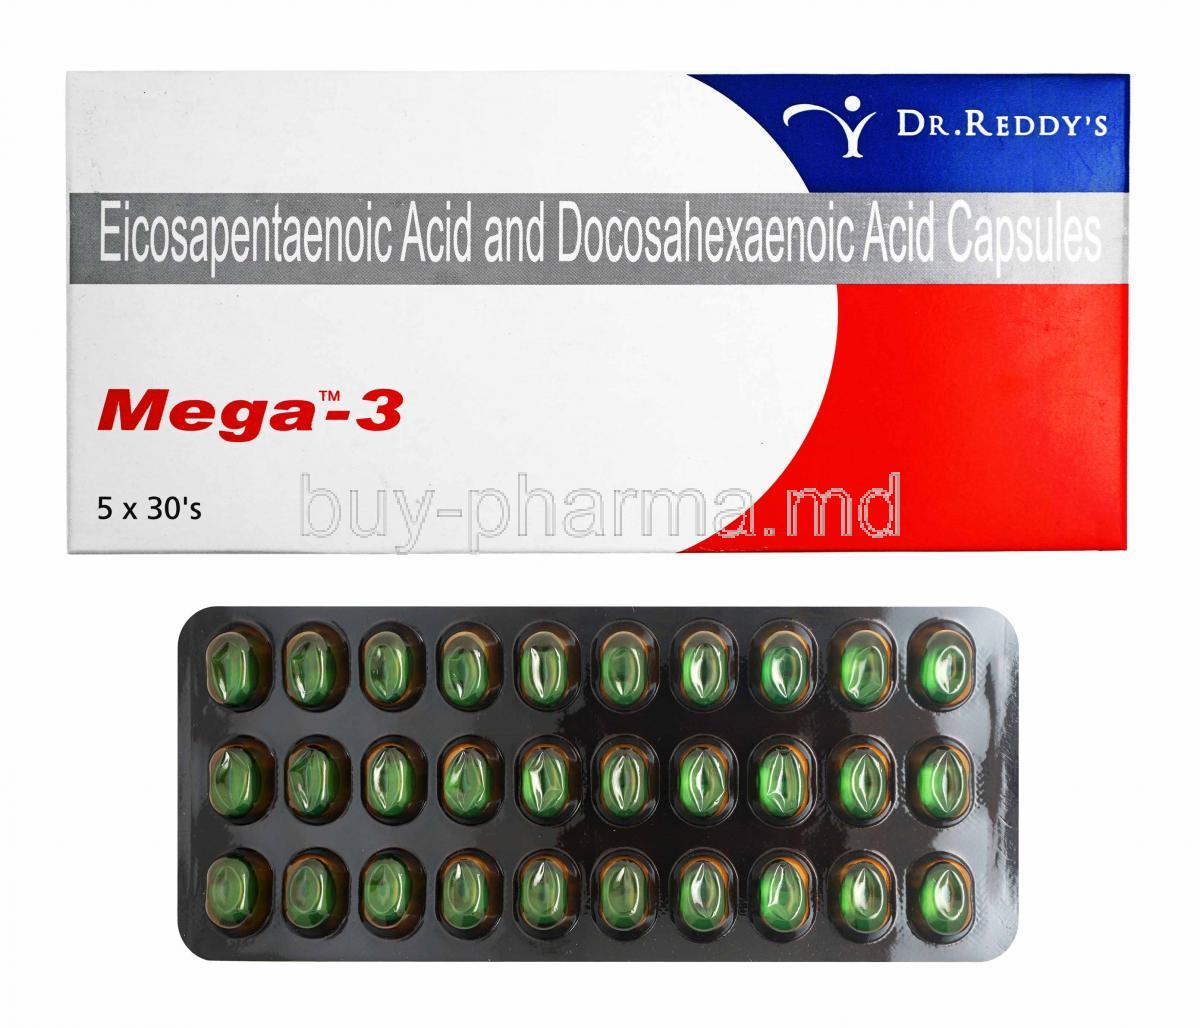 Mega-3, Eicosapentaenoic Acid and Docosahexaenoic Acid box and capsules